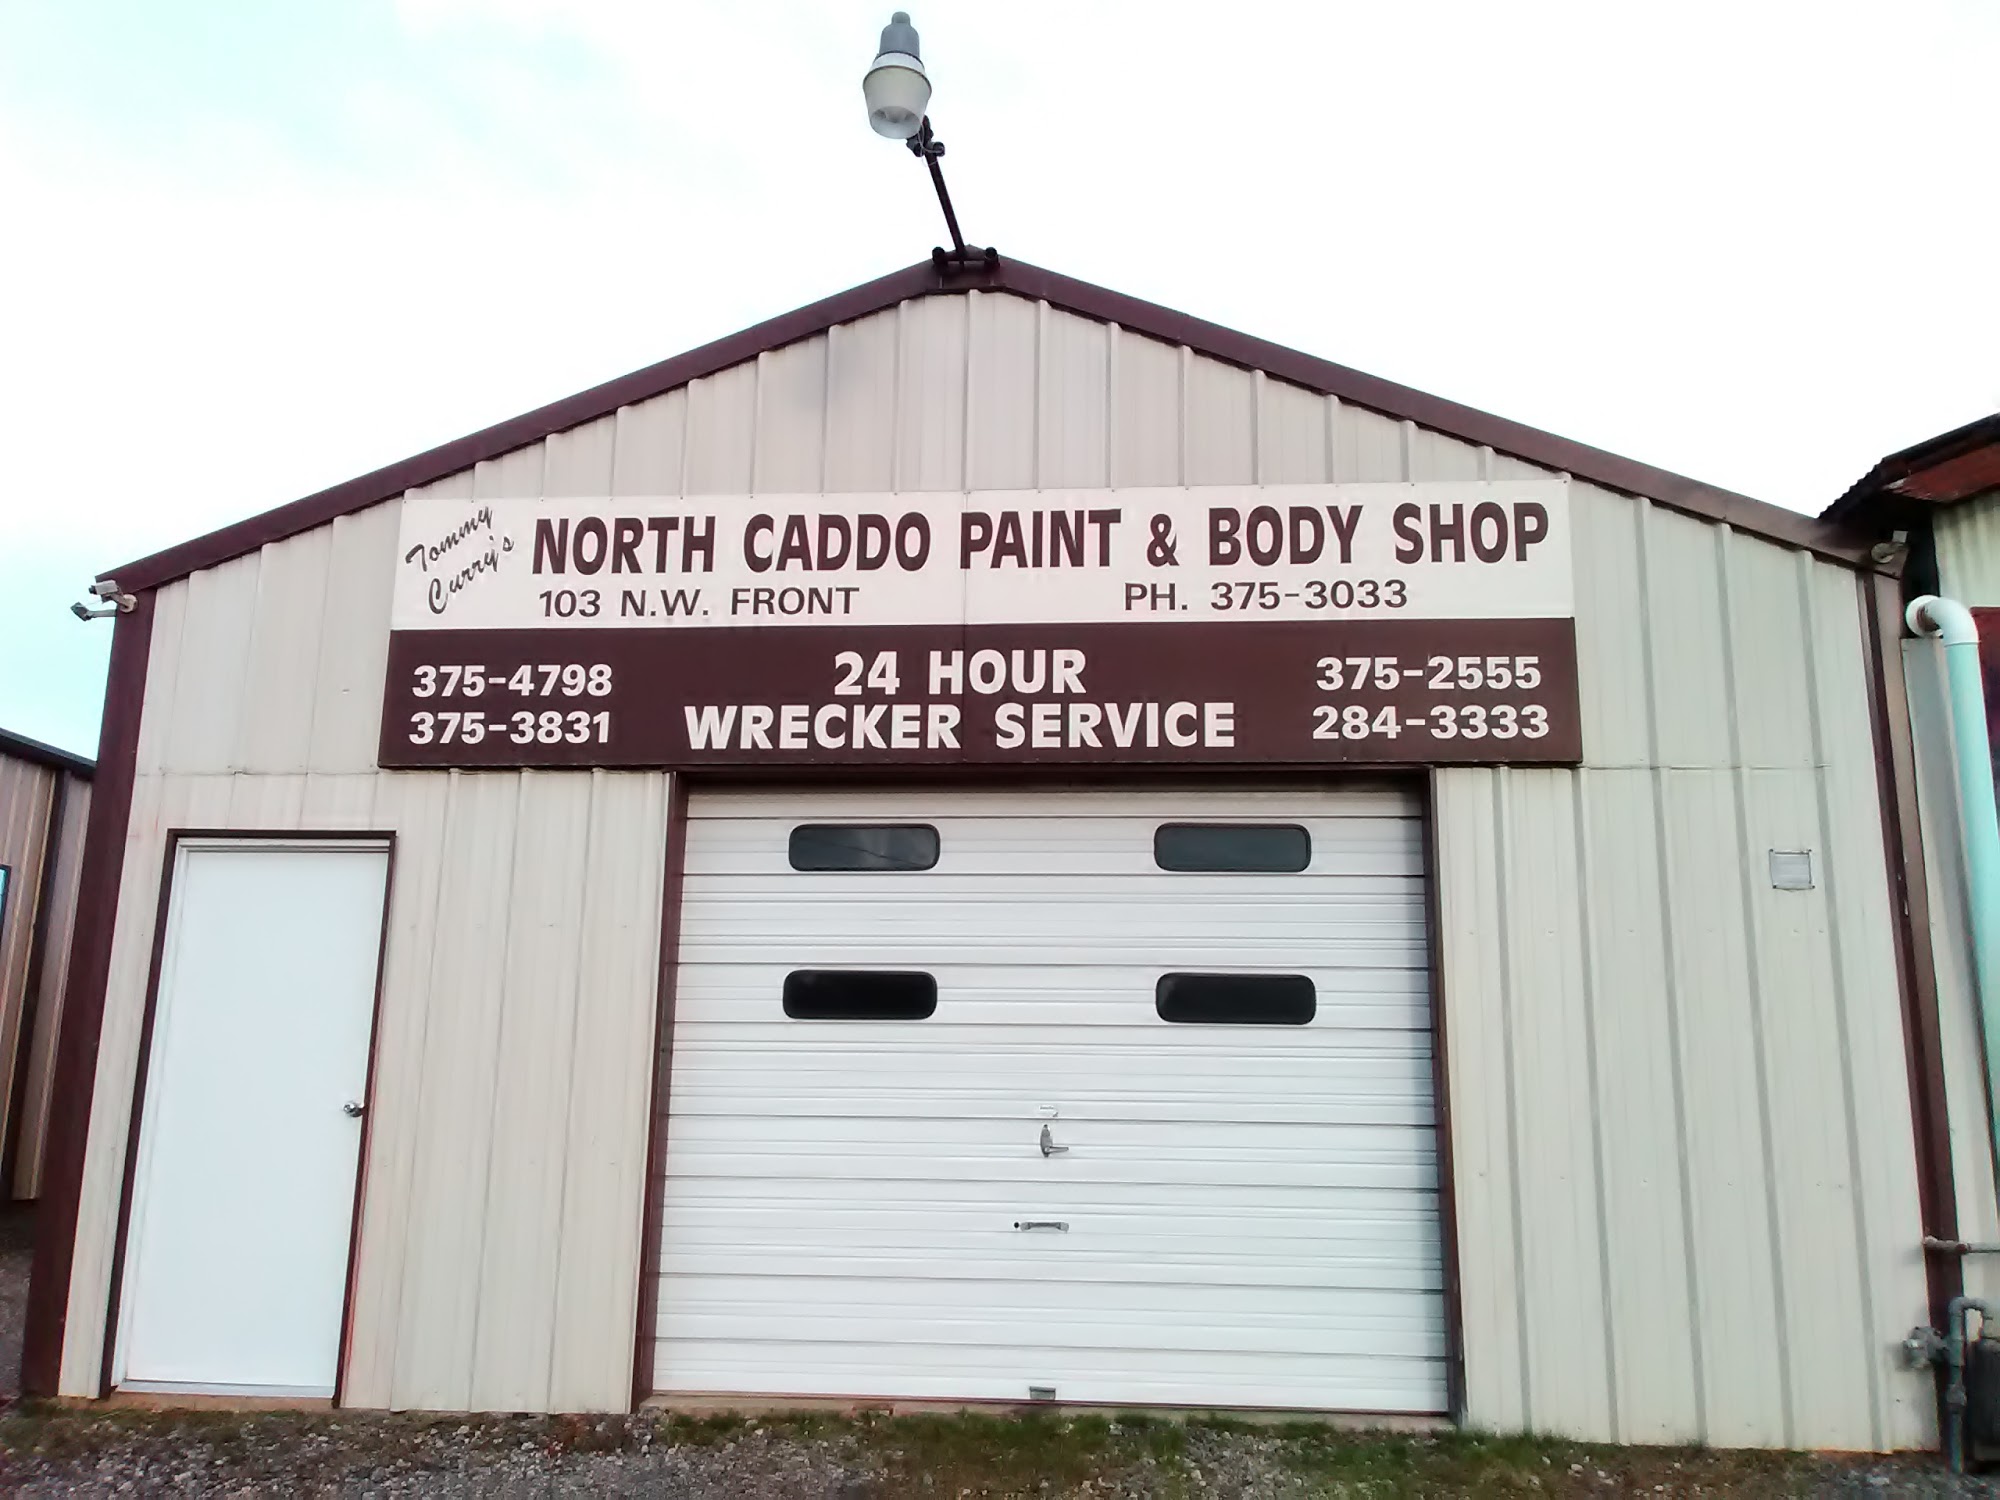 North Caddo Paint & Body Shop